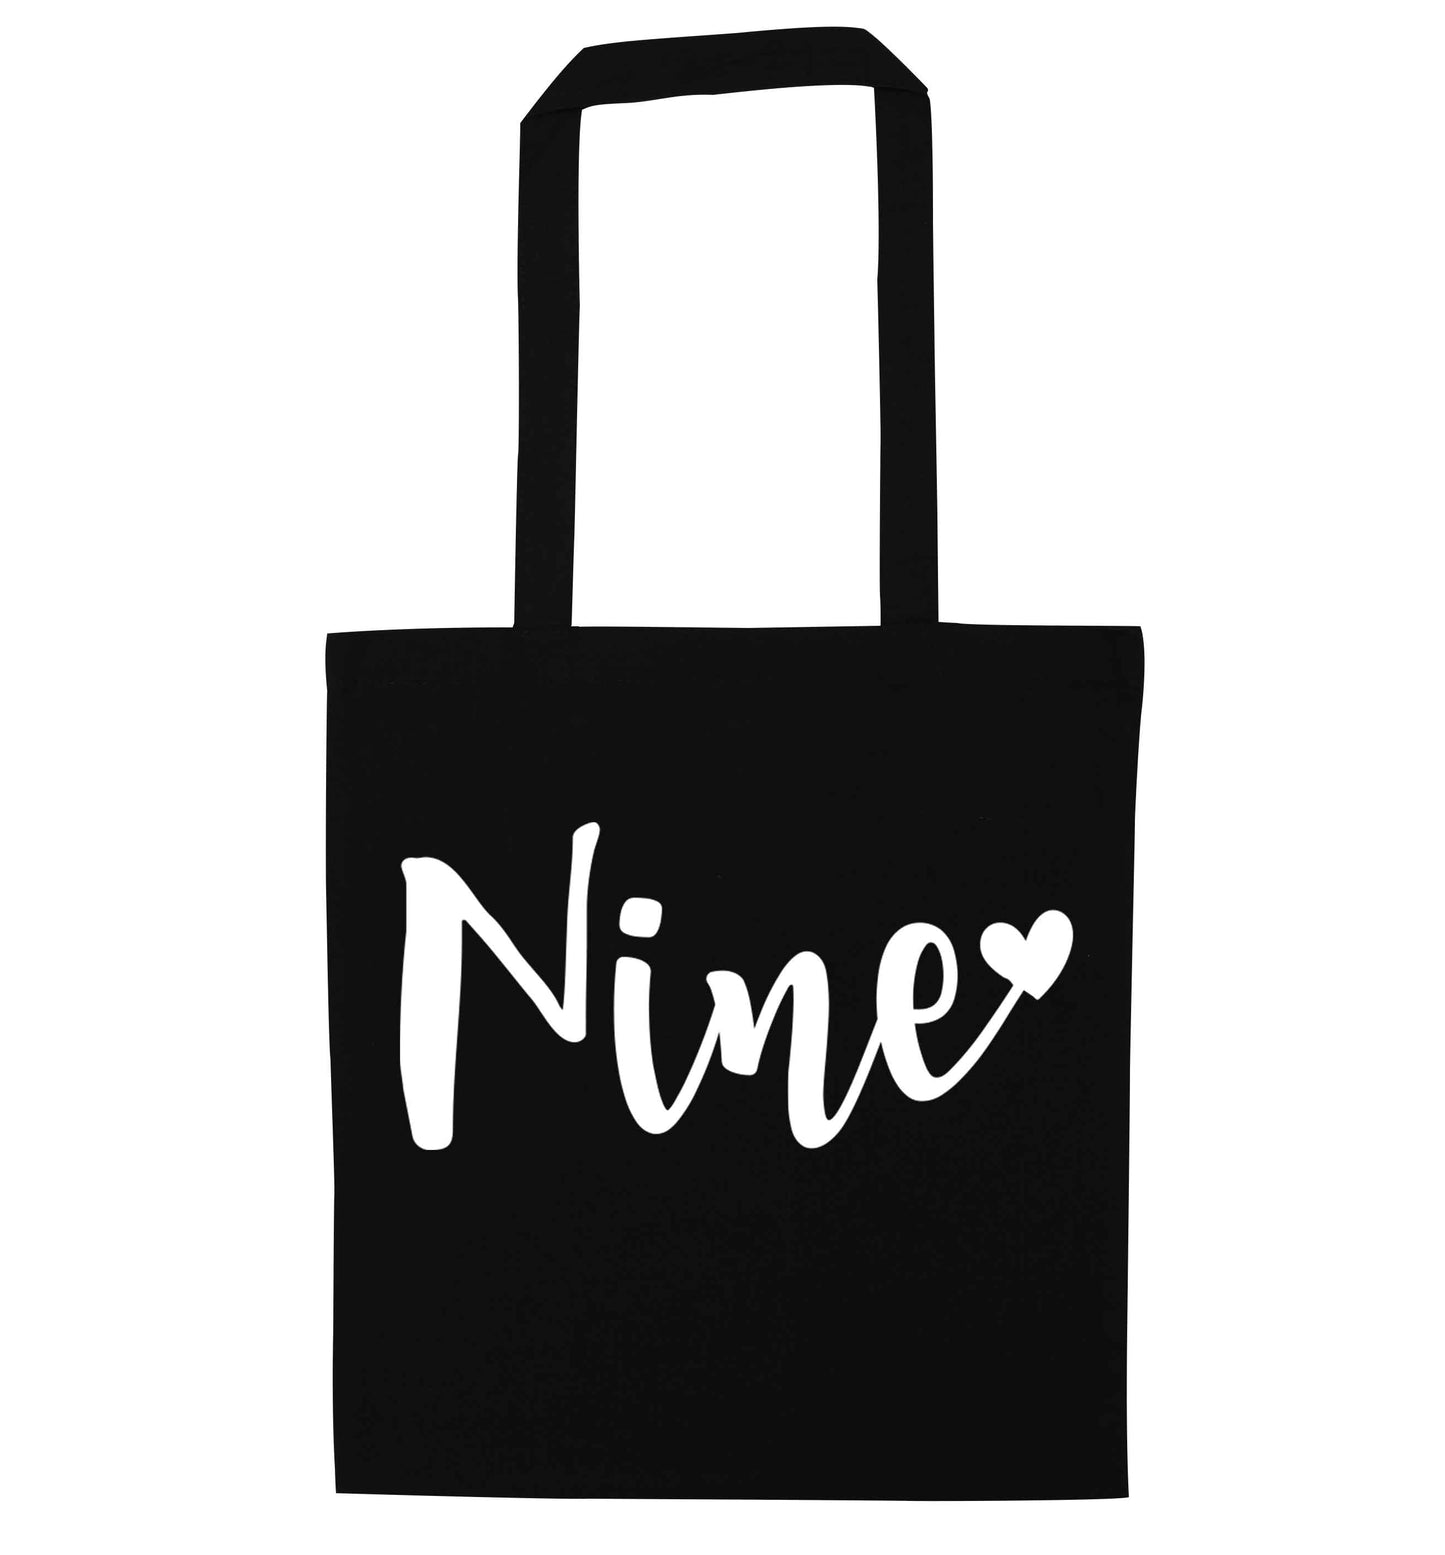 Nine and heart black tote bag